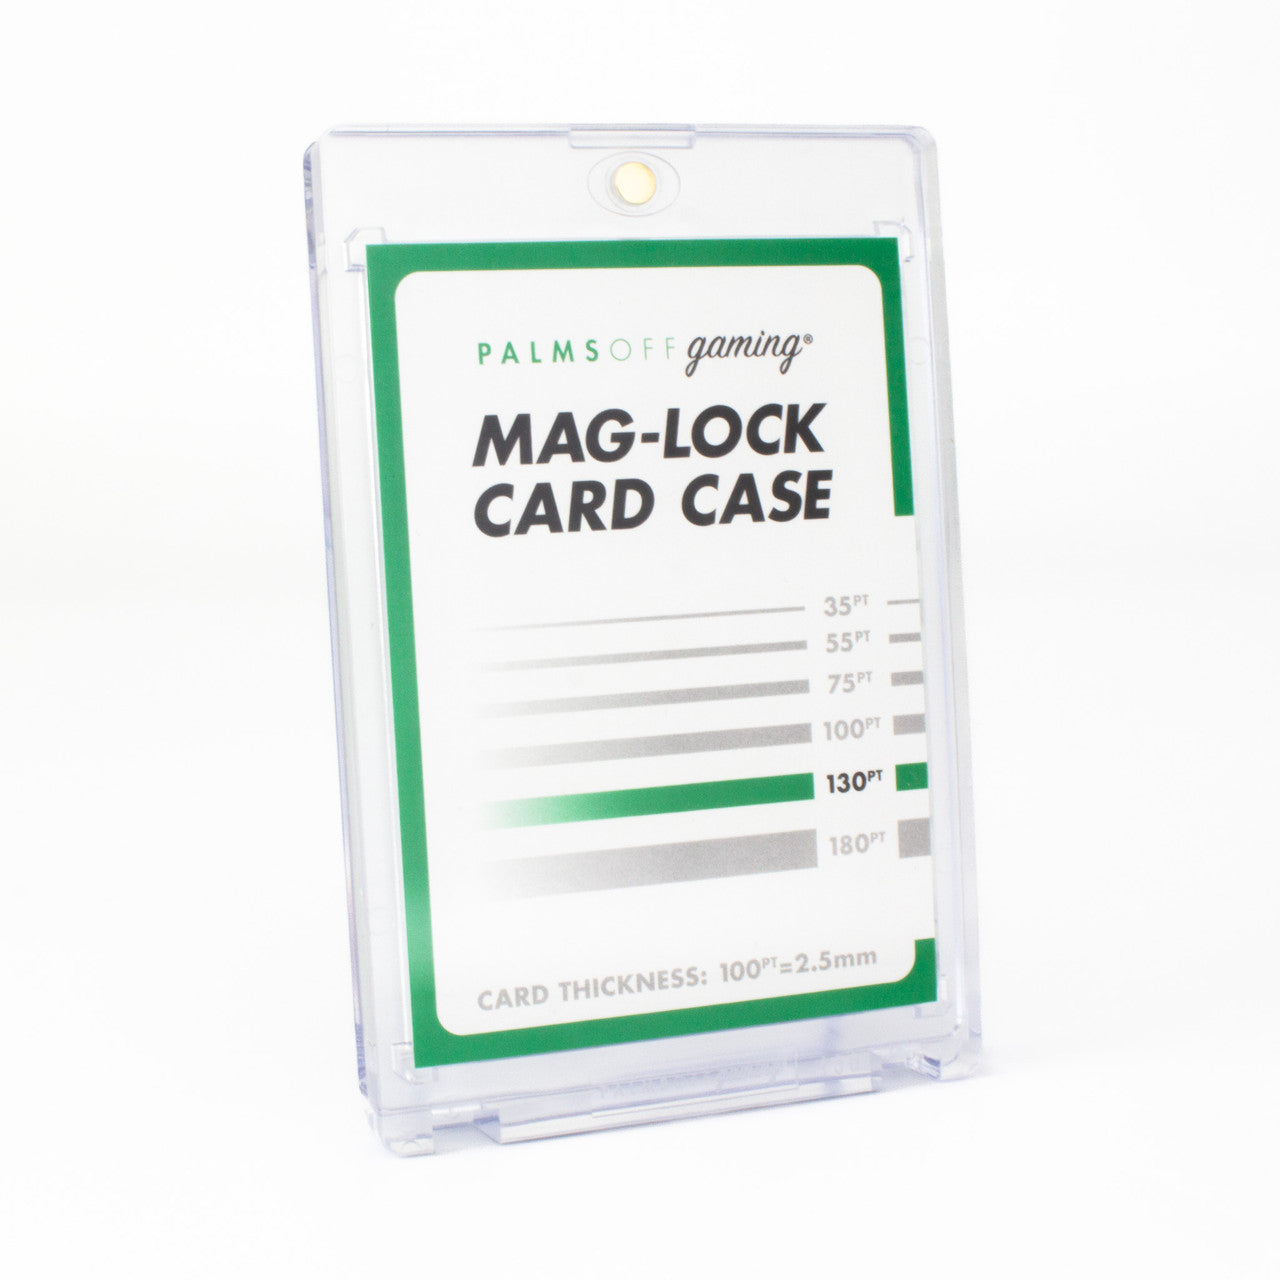 Palms Off Gaming 130pt Mag-Lock Card Case